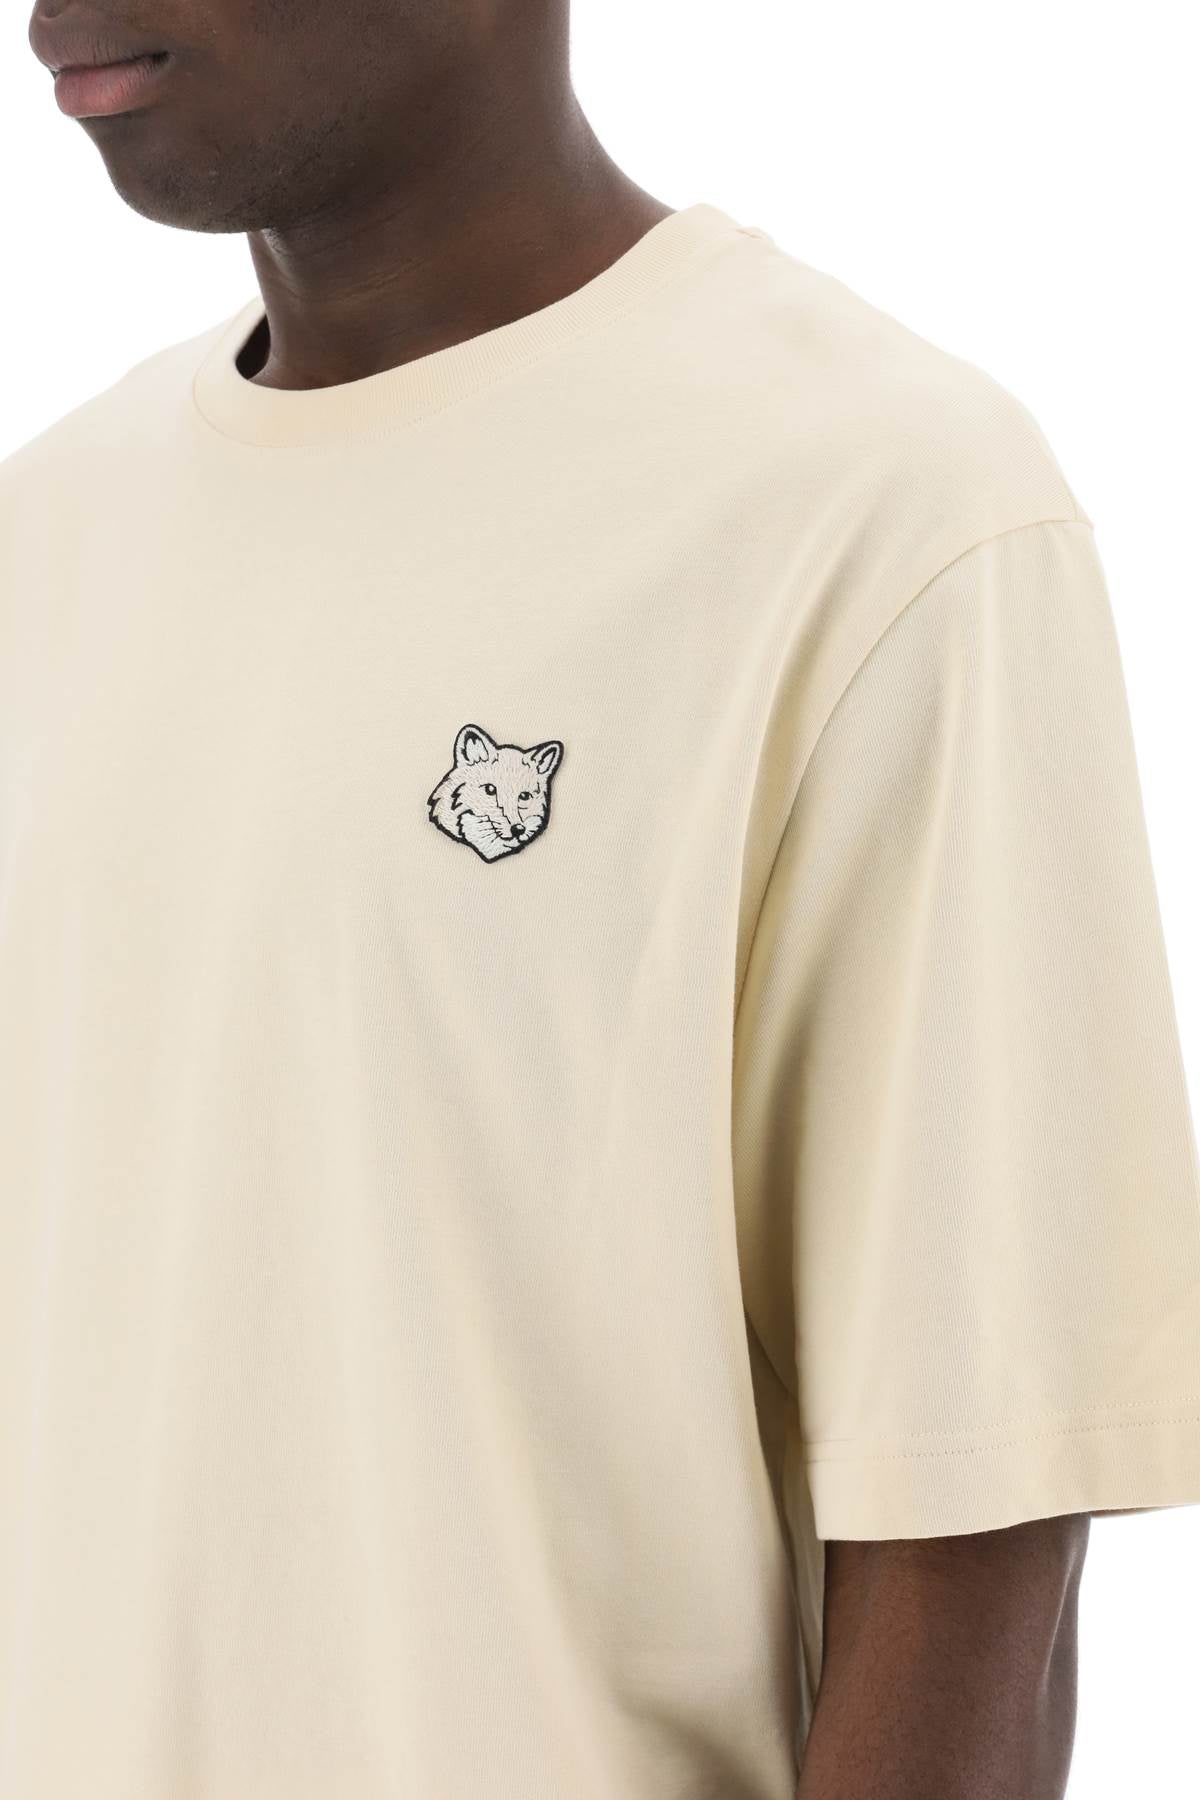 Maison kitsune "bold fox head patch t-shirt"-3